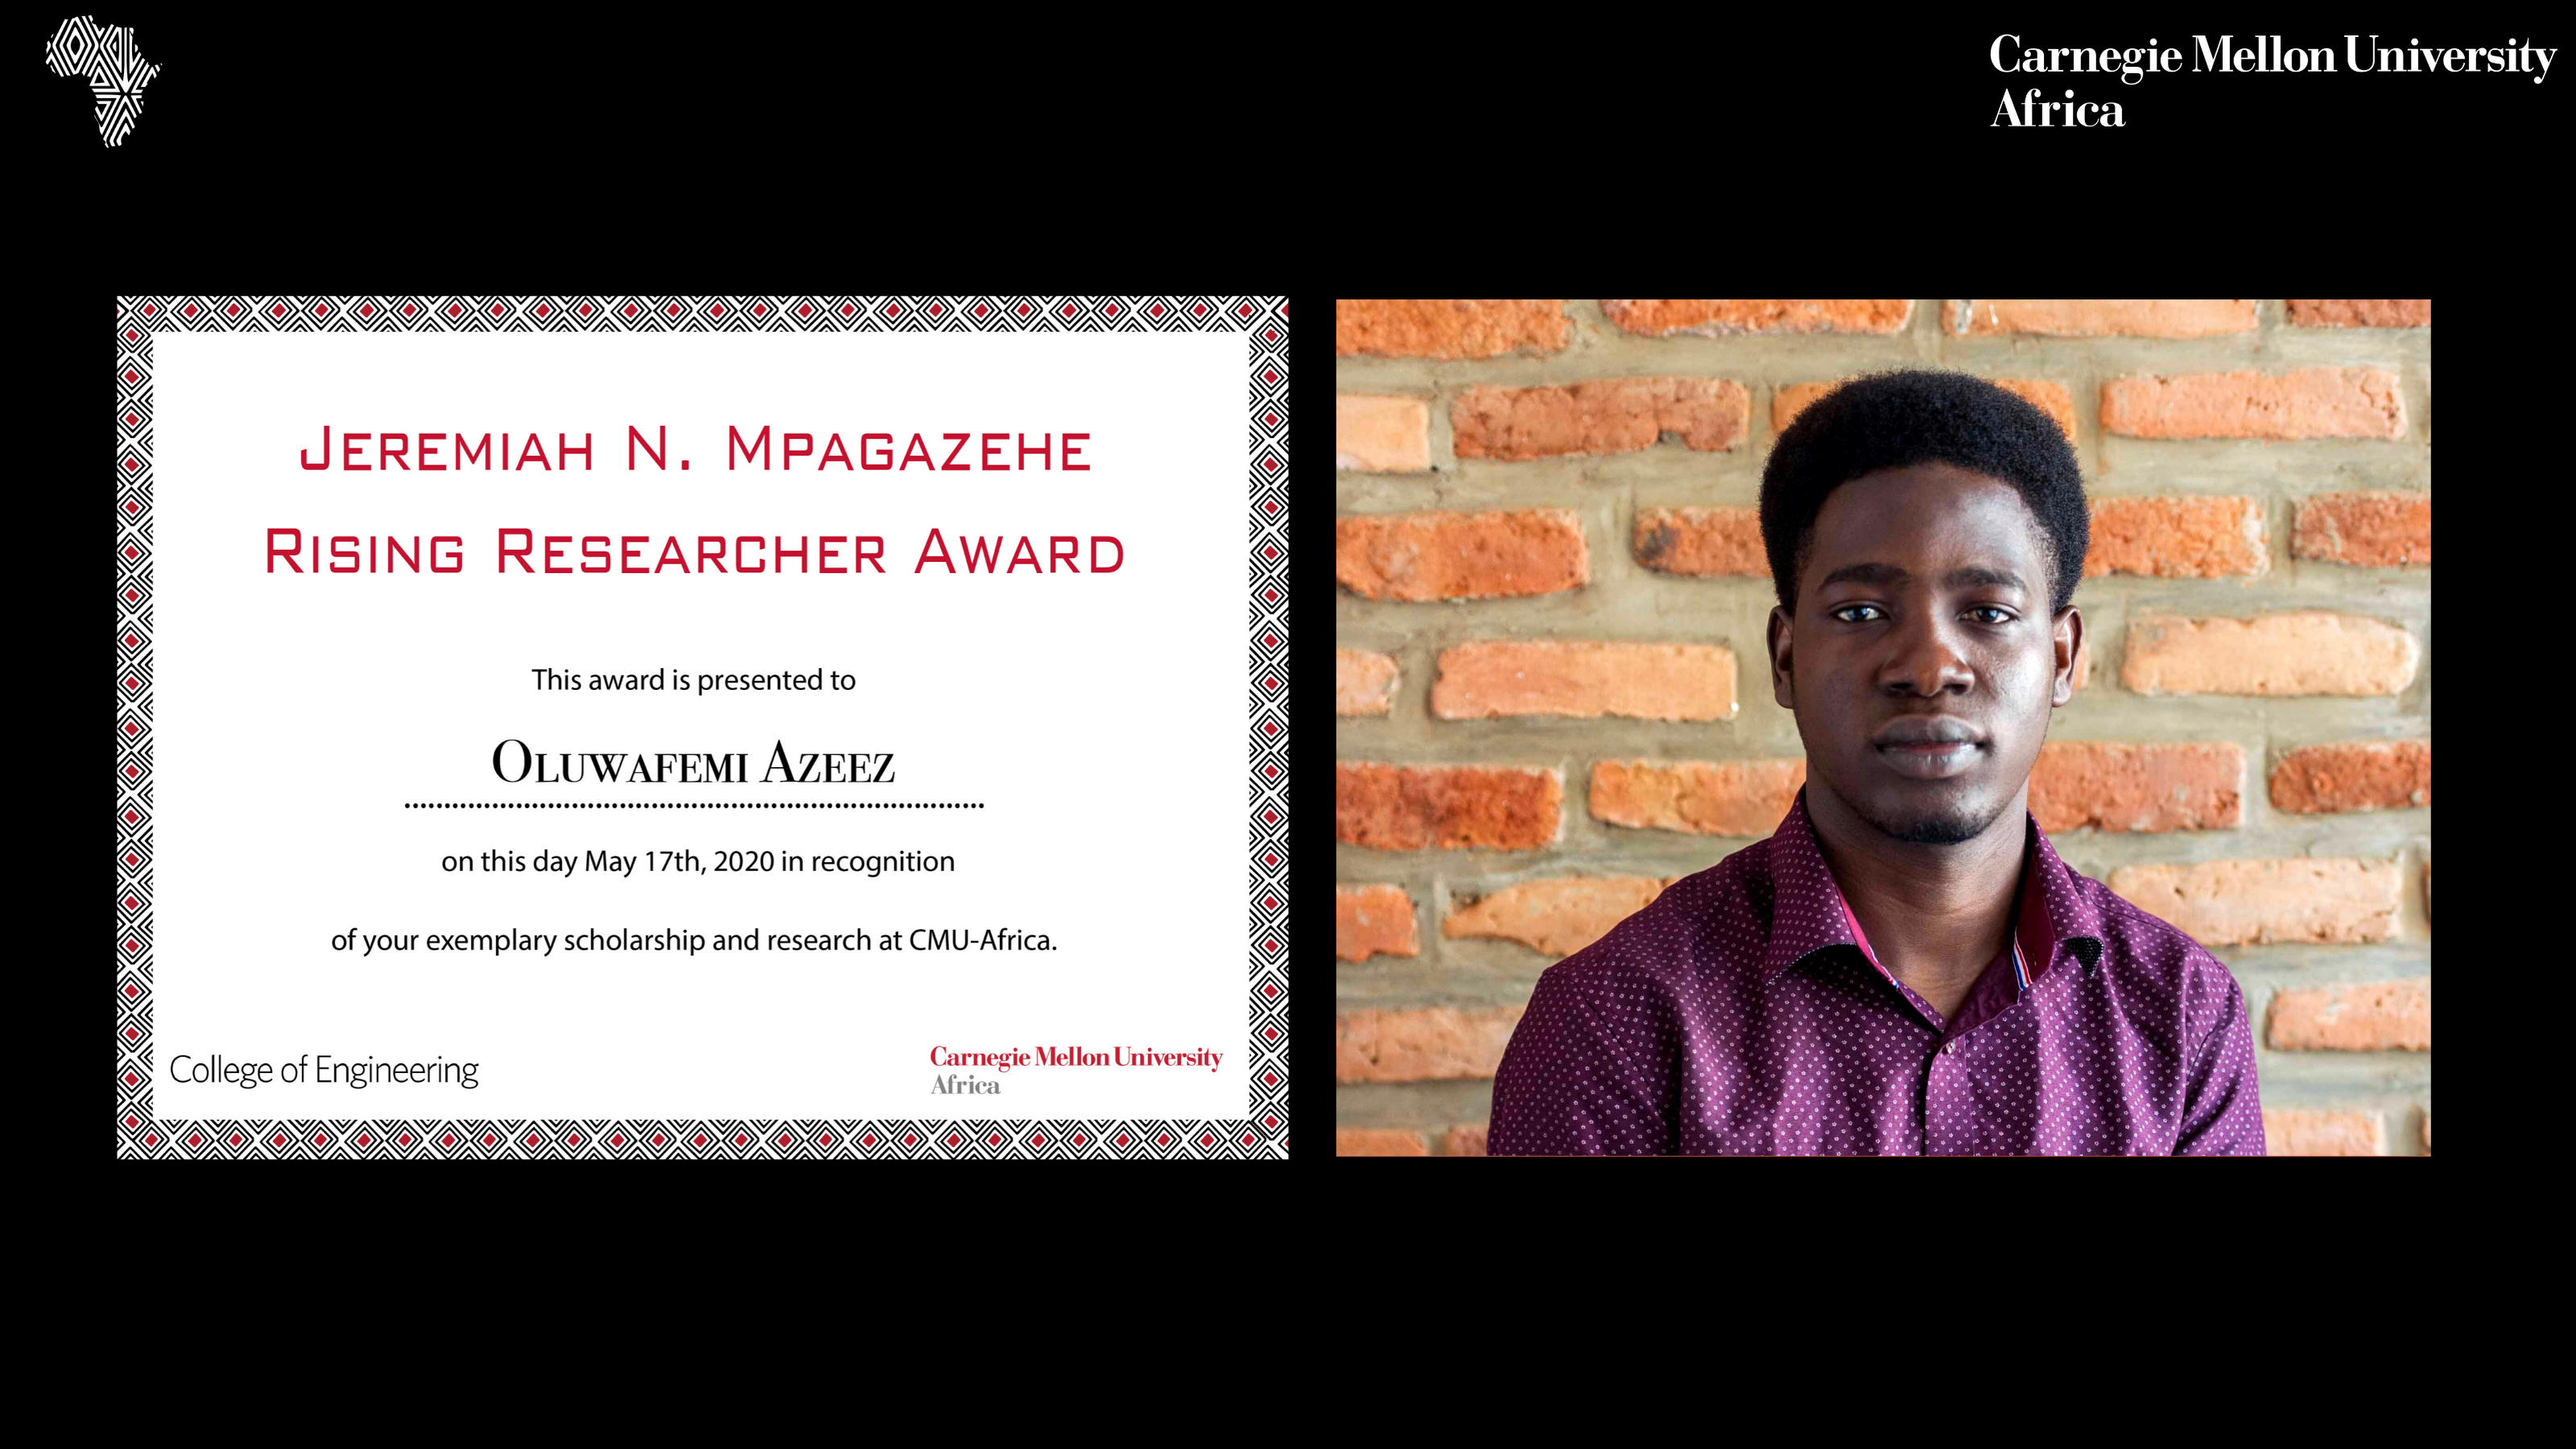 Oluwafemi Azeez (E’20) received the Jeremiah N. Mpagazehe Rising Researcher Award